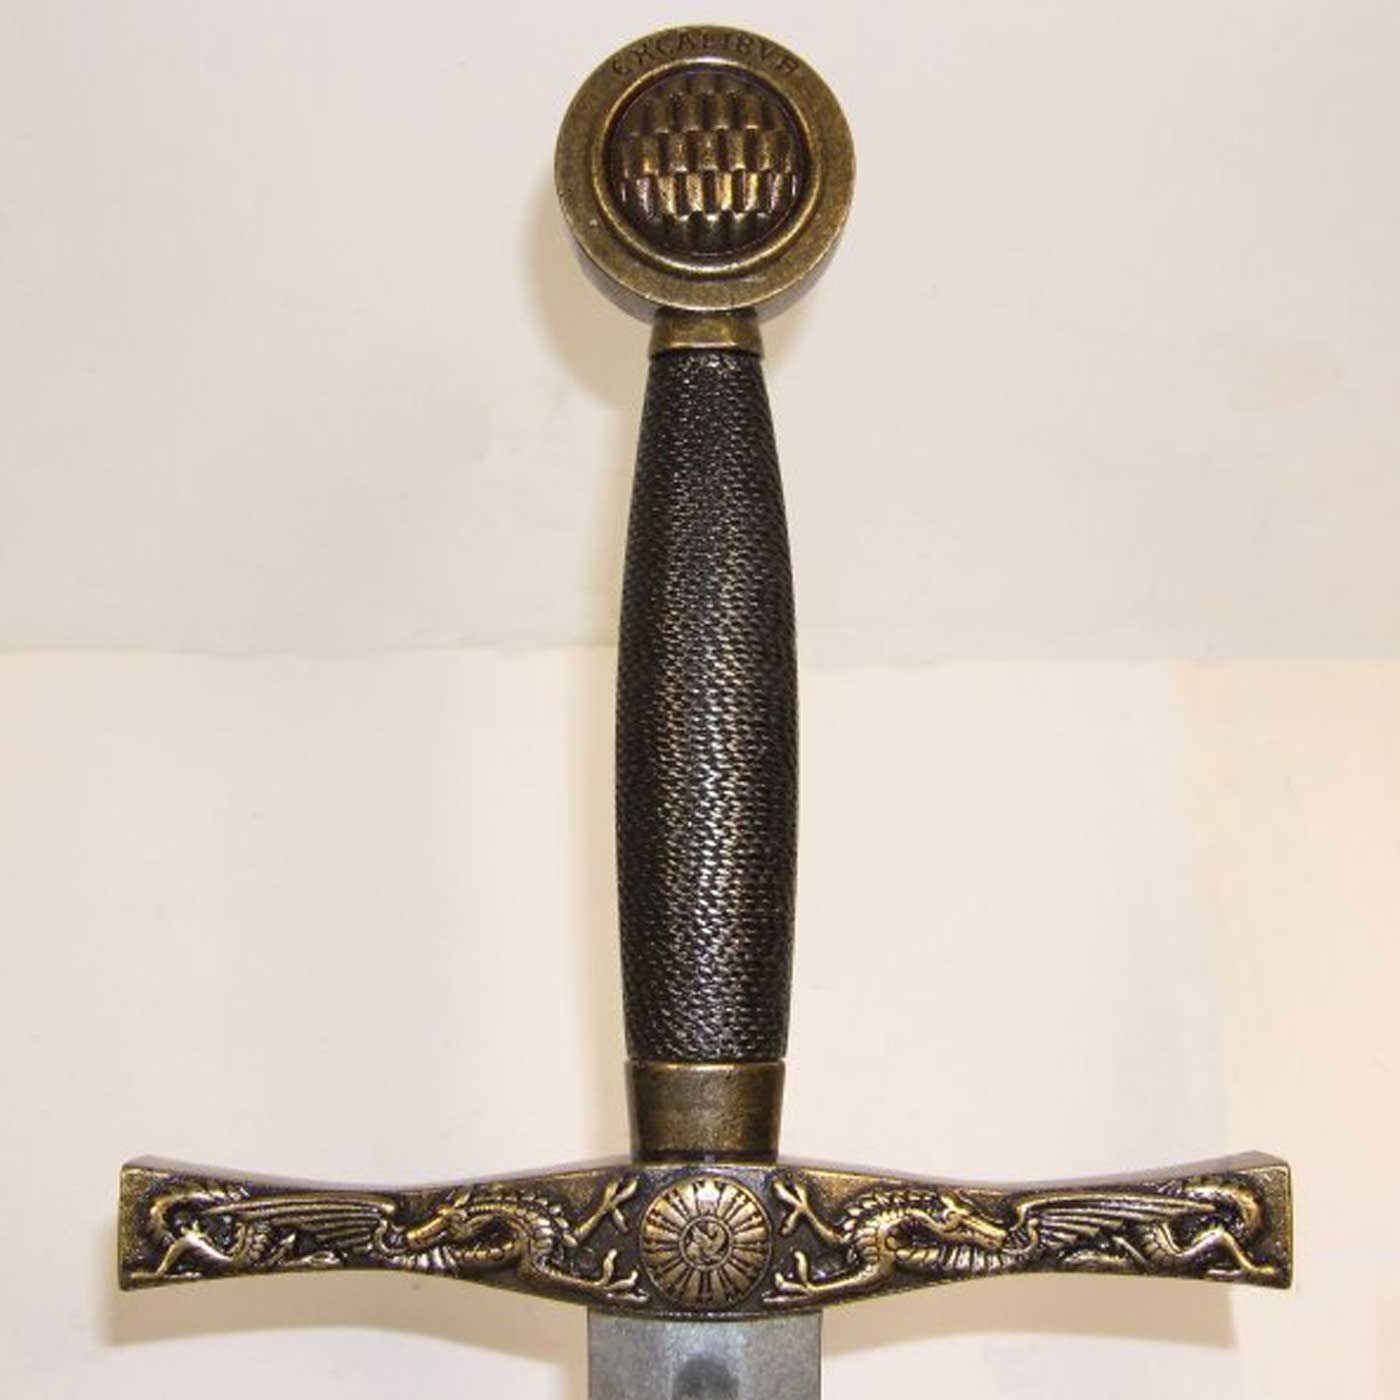 denix-excalibur-espada-legendaria-del-rey-arturo-4123(3)